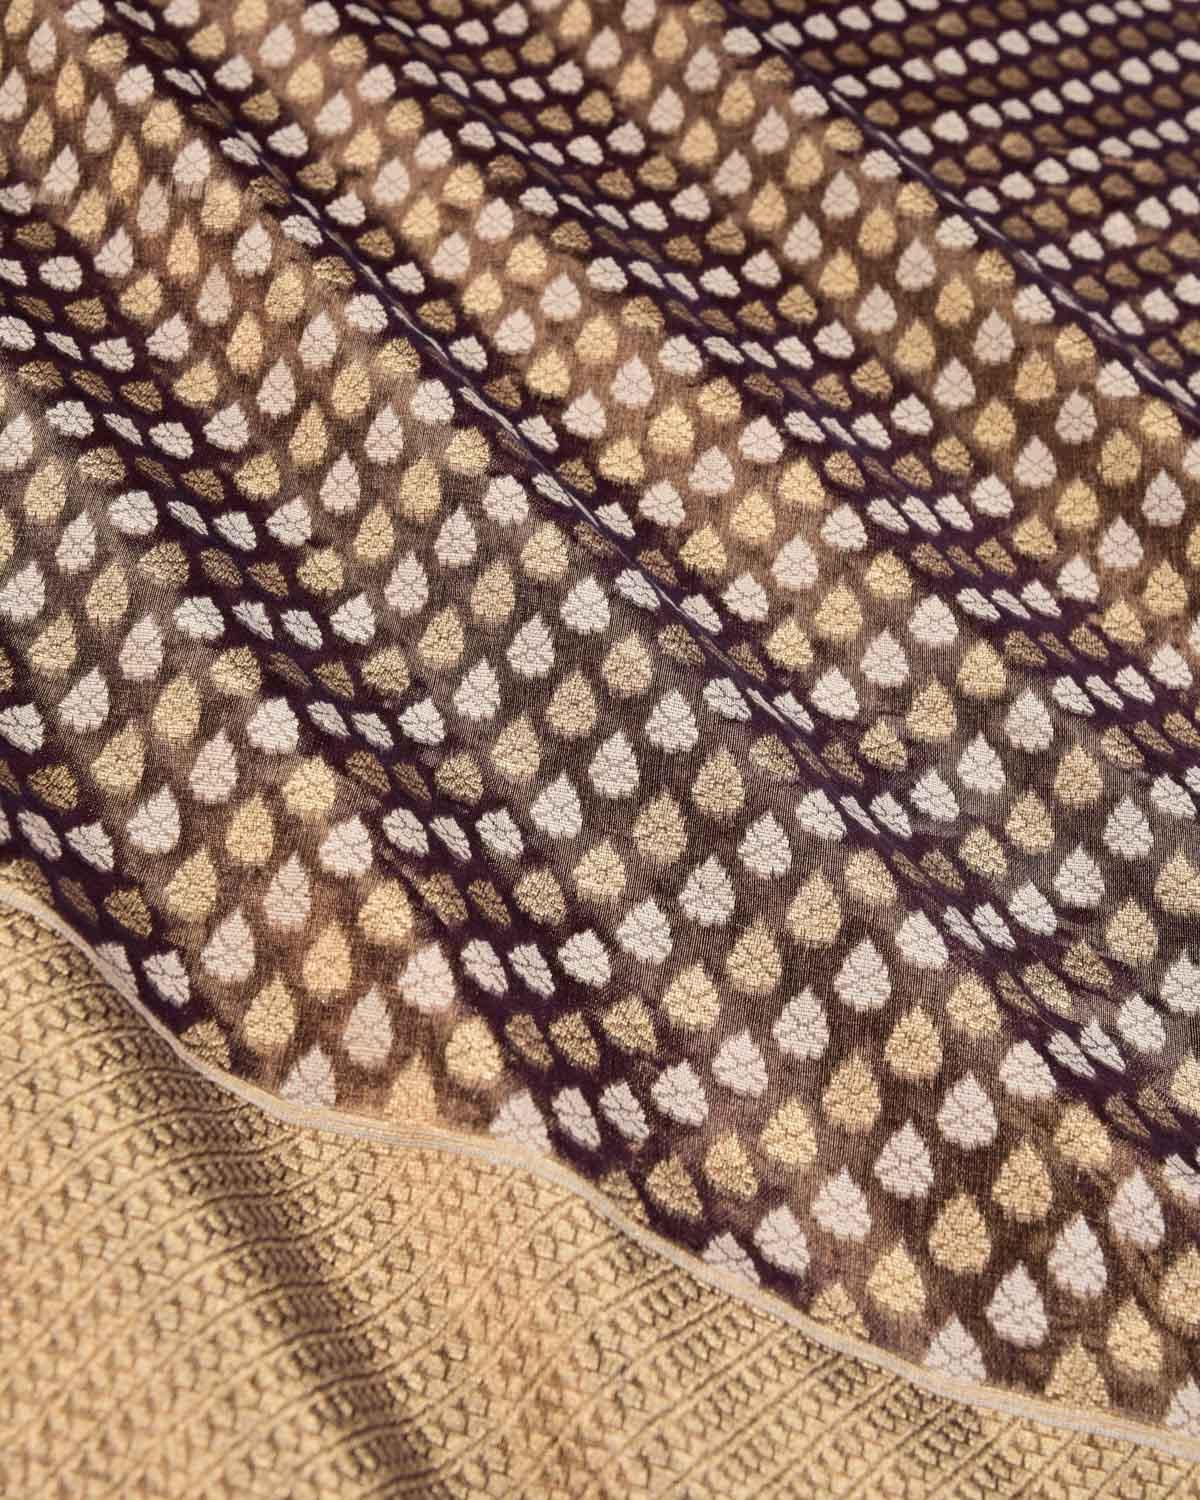 Metallic Brown Banarasi Resham & Gold Zari Ghani Buti Cutwork Brocade Handwoven Kora Tissue Saree - By HolyWeaves, Benares